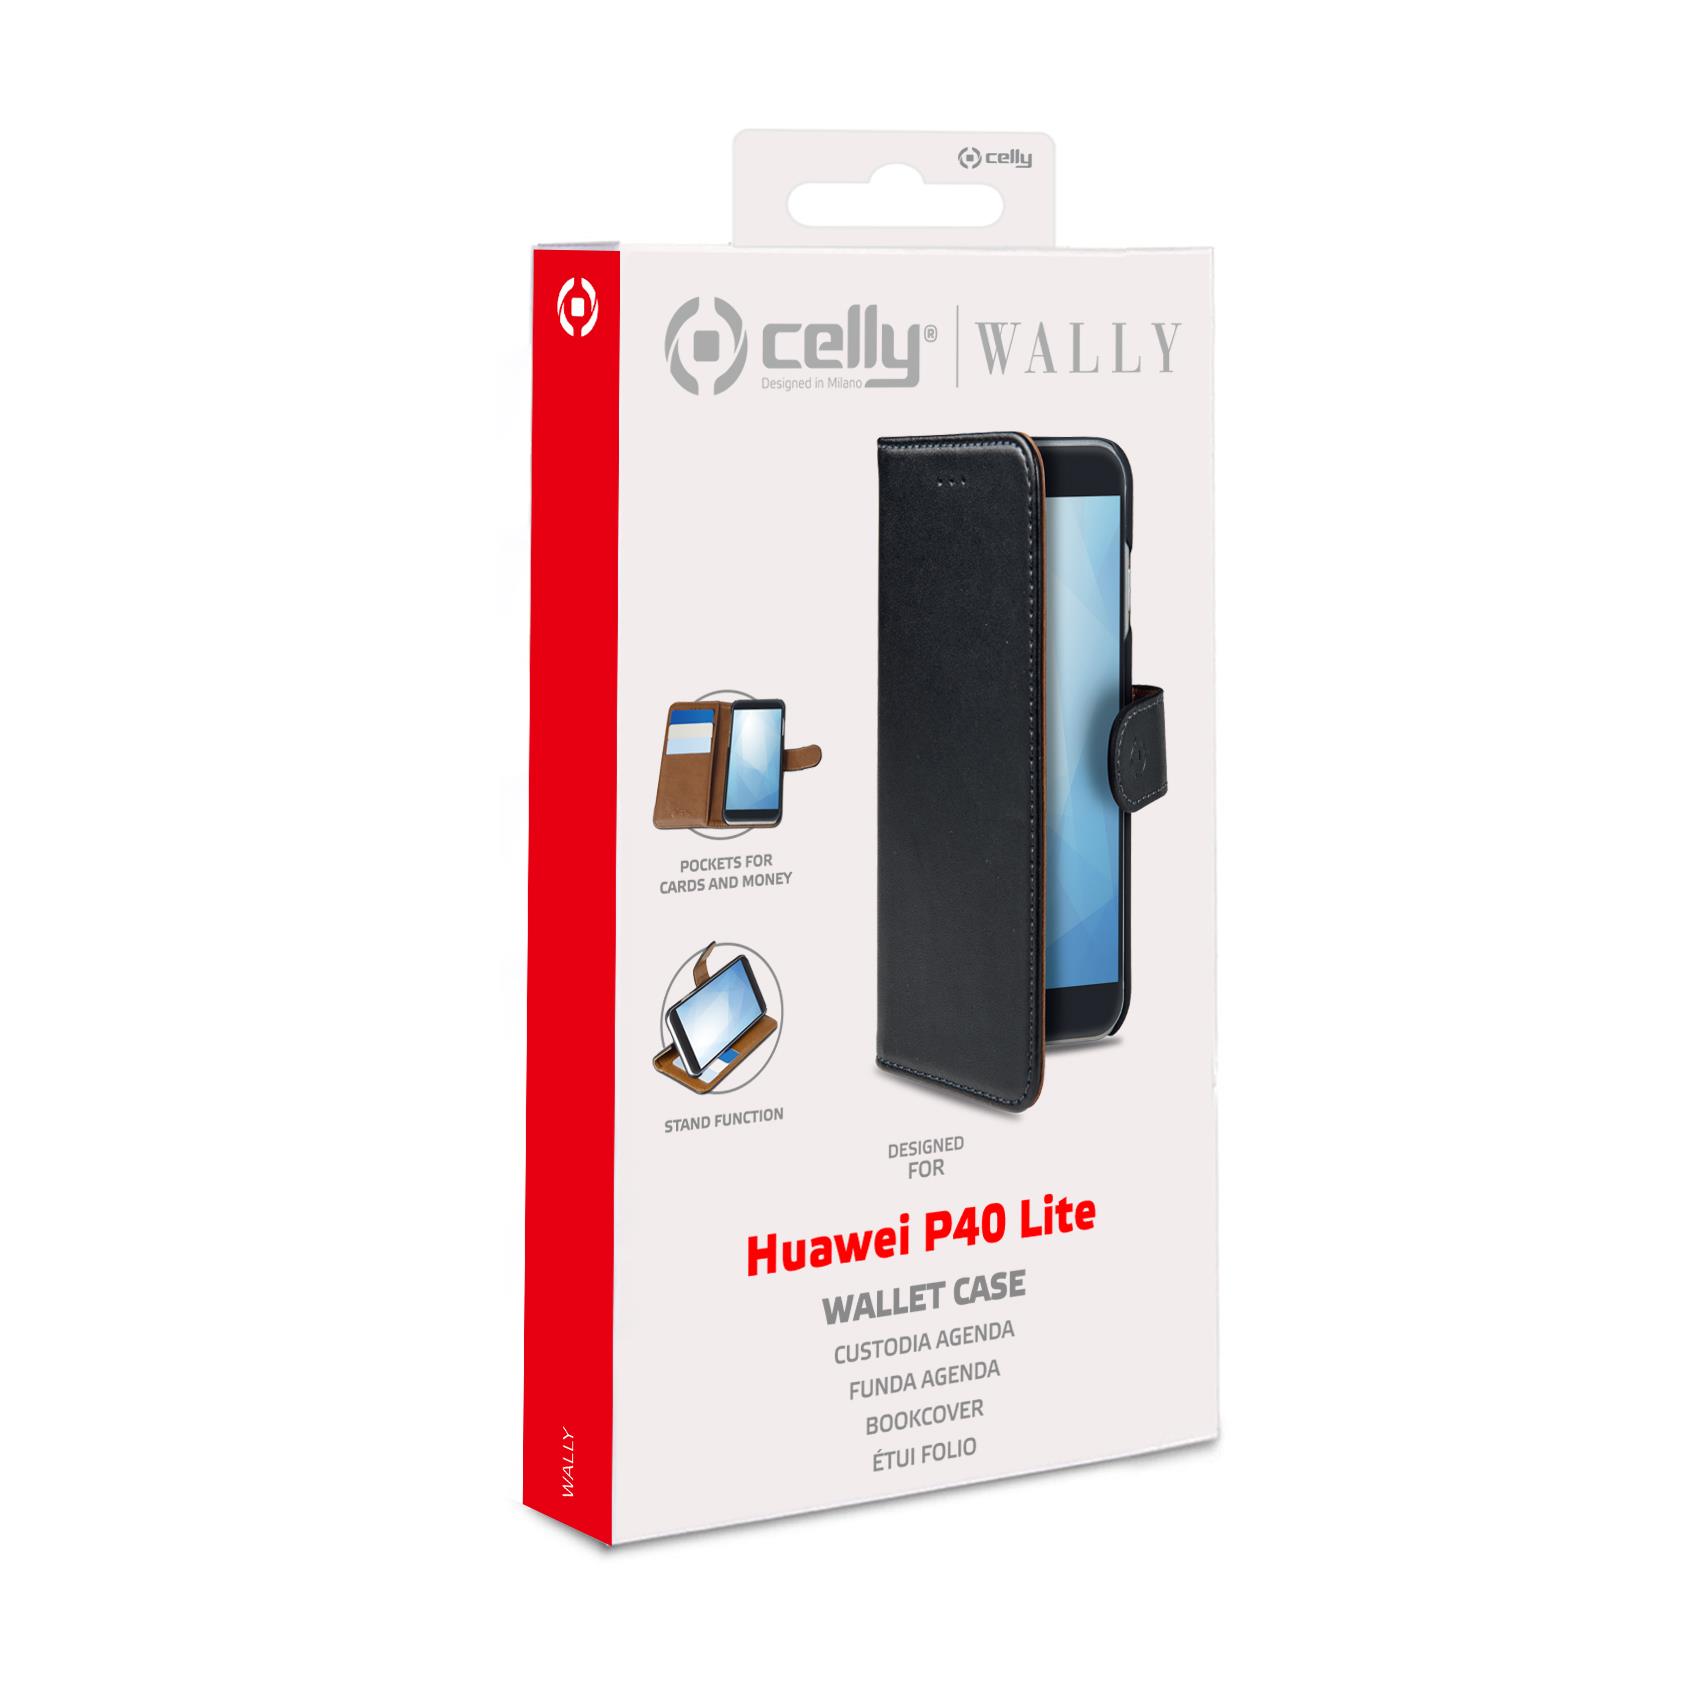 Wally Case Huawei P40 Lite Black Celly Wally911 8021735762720